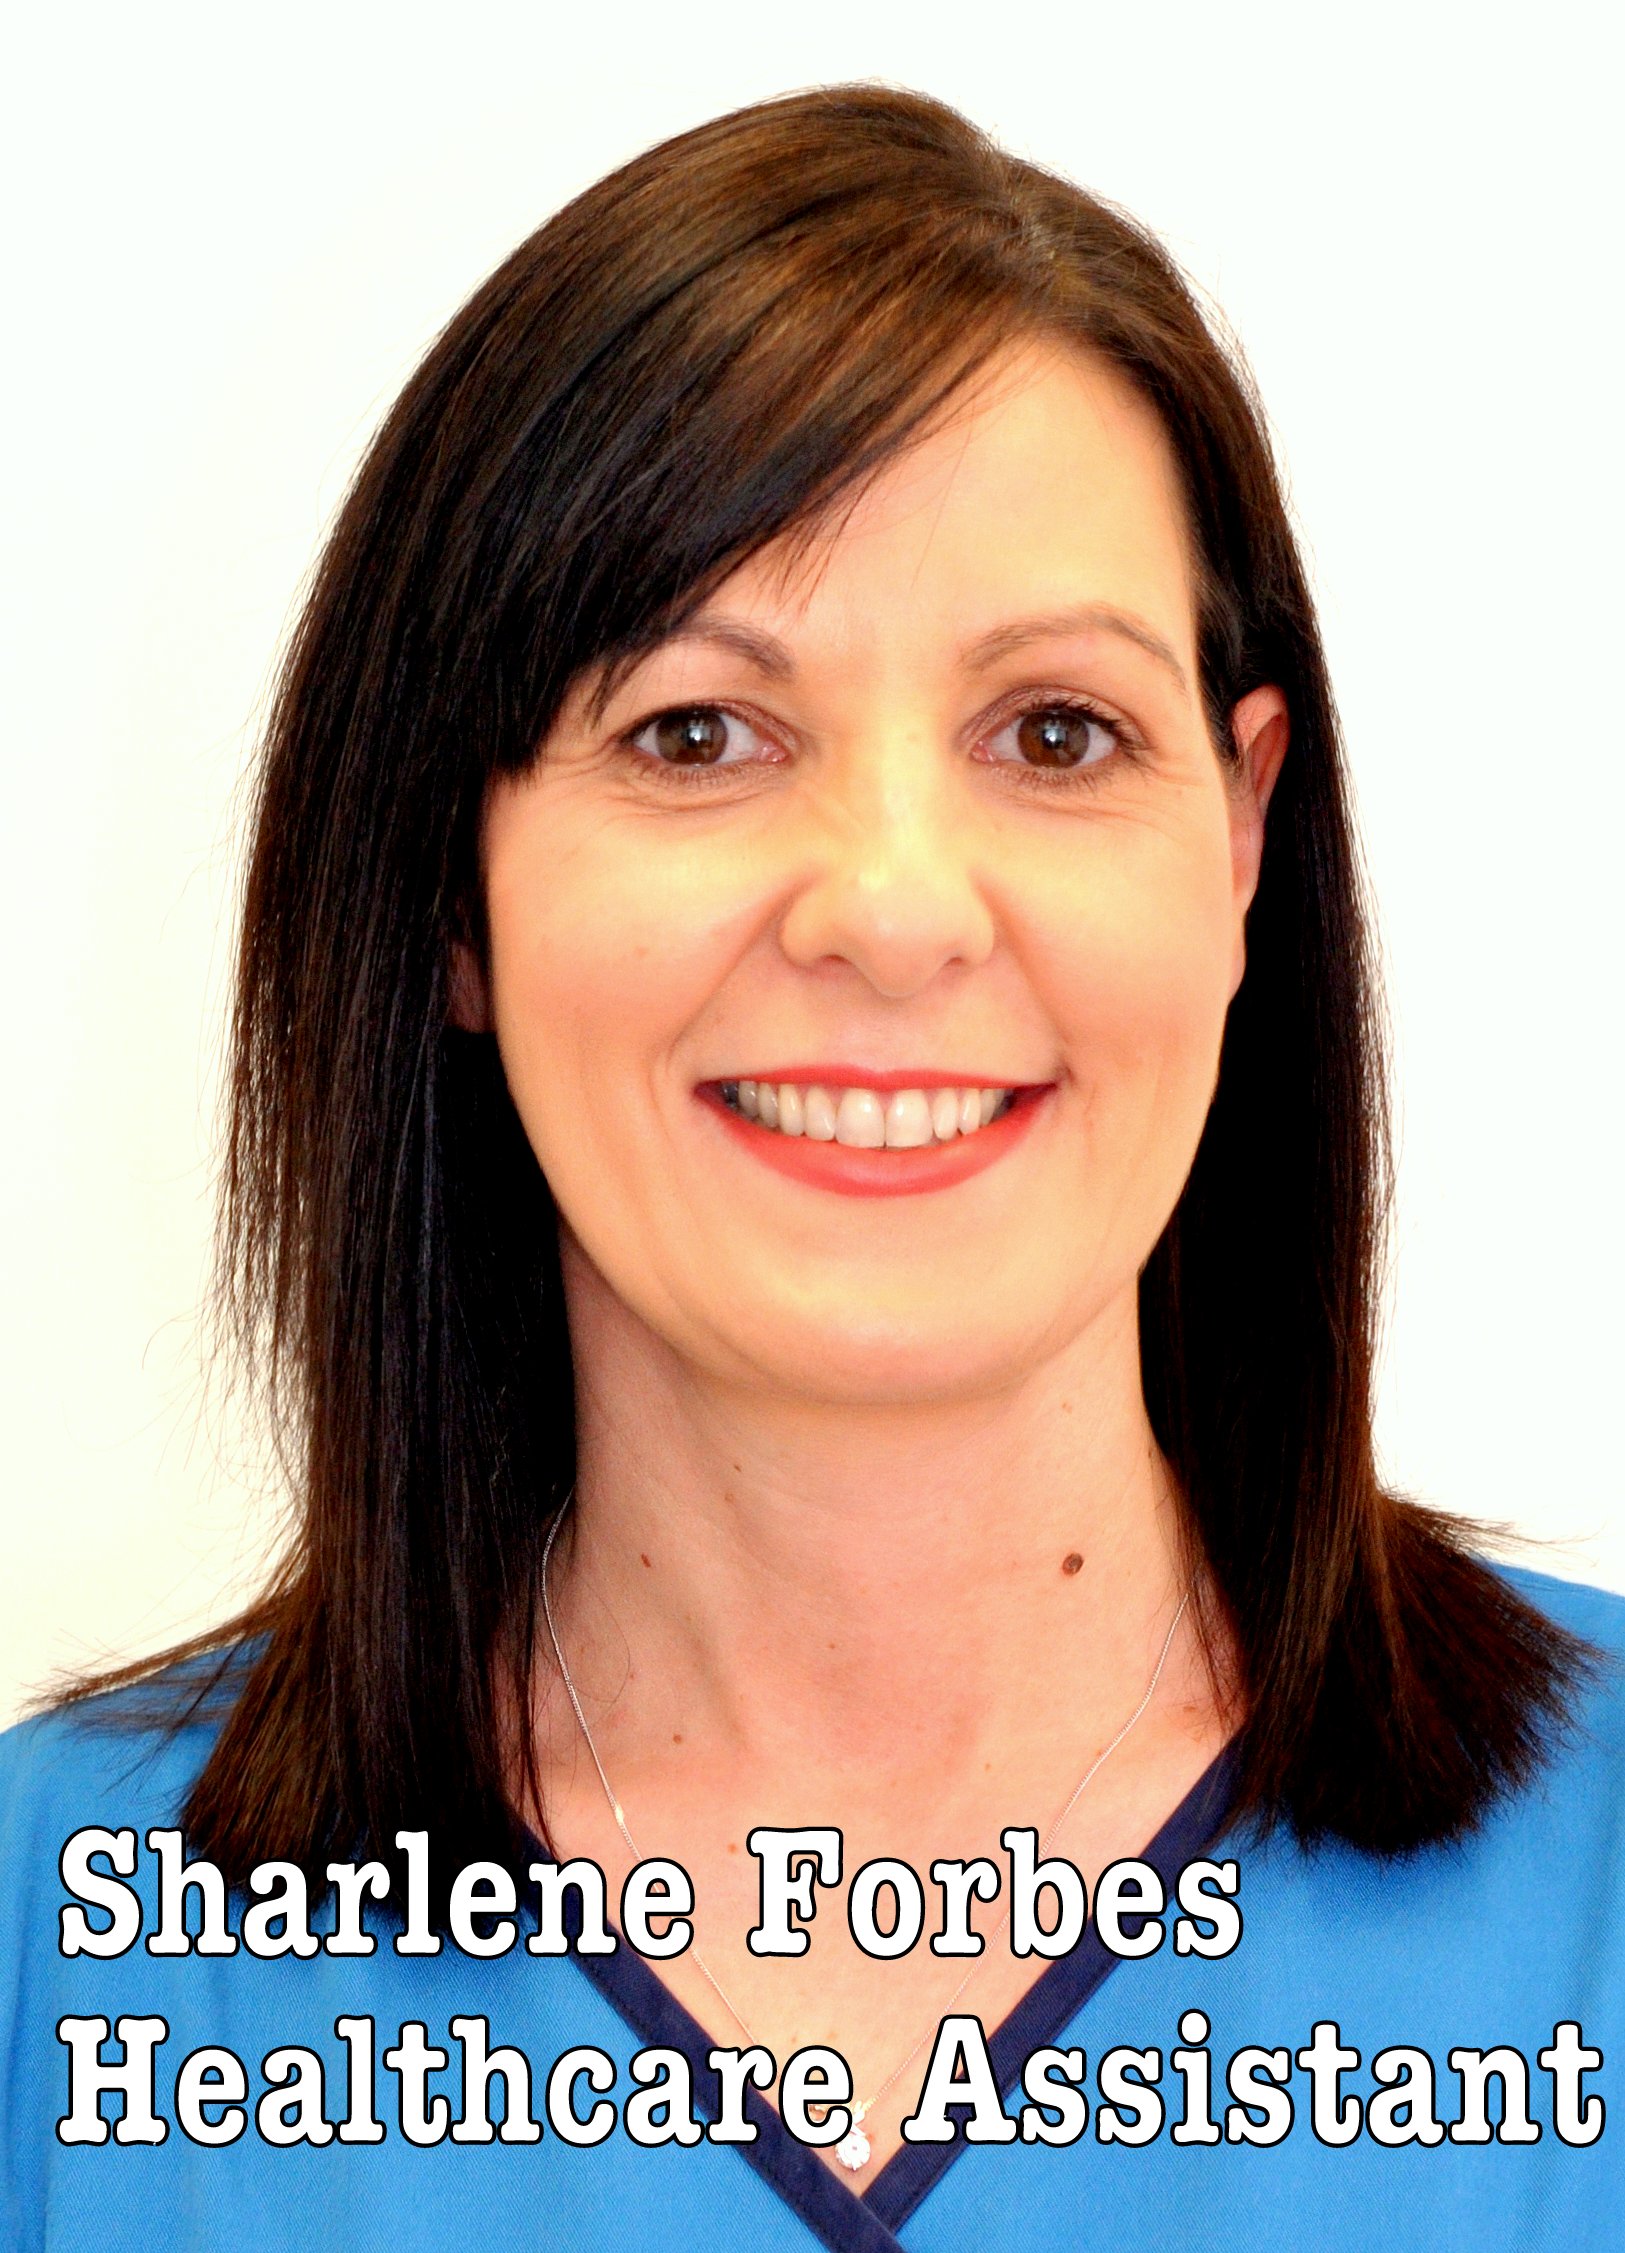 Sharlene Forbes